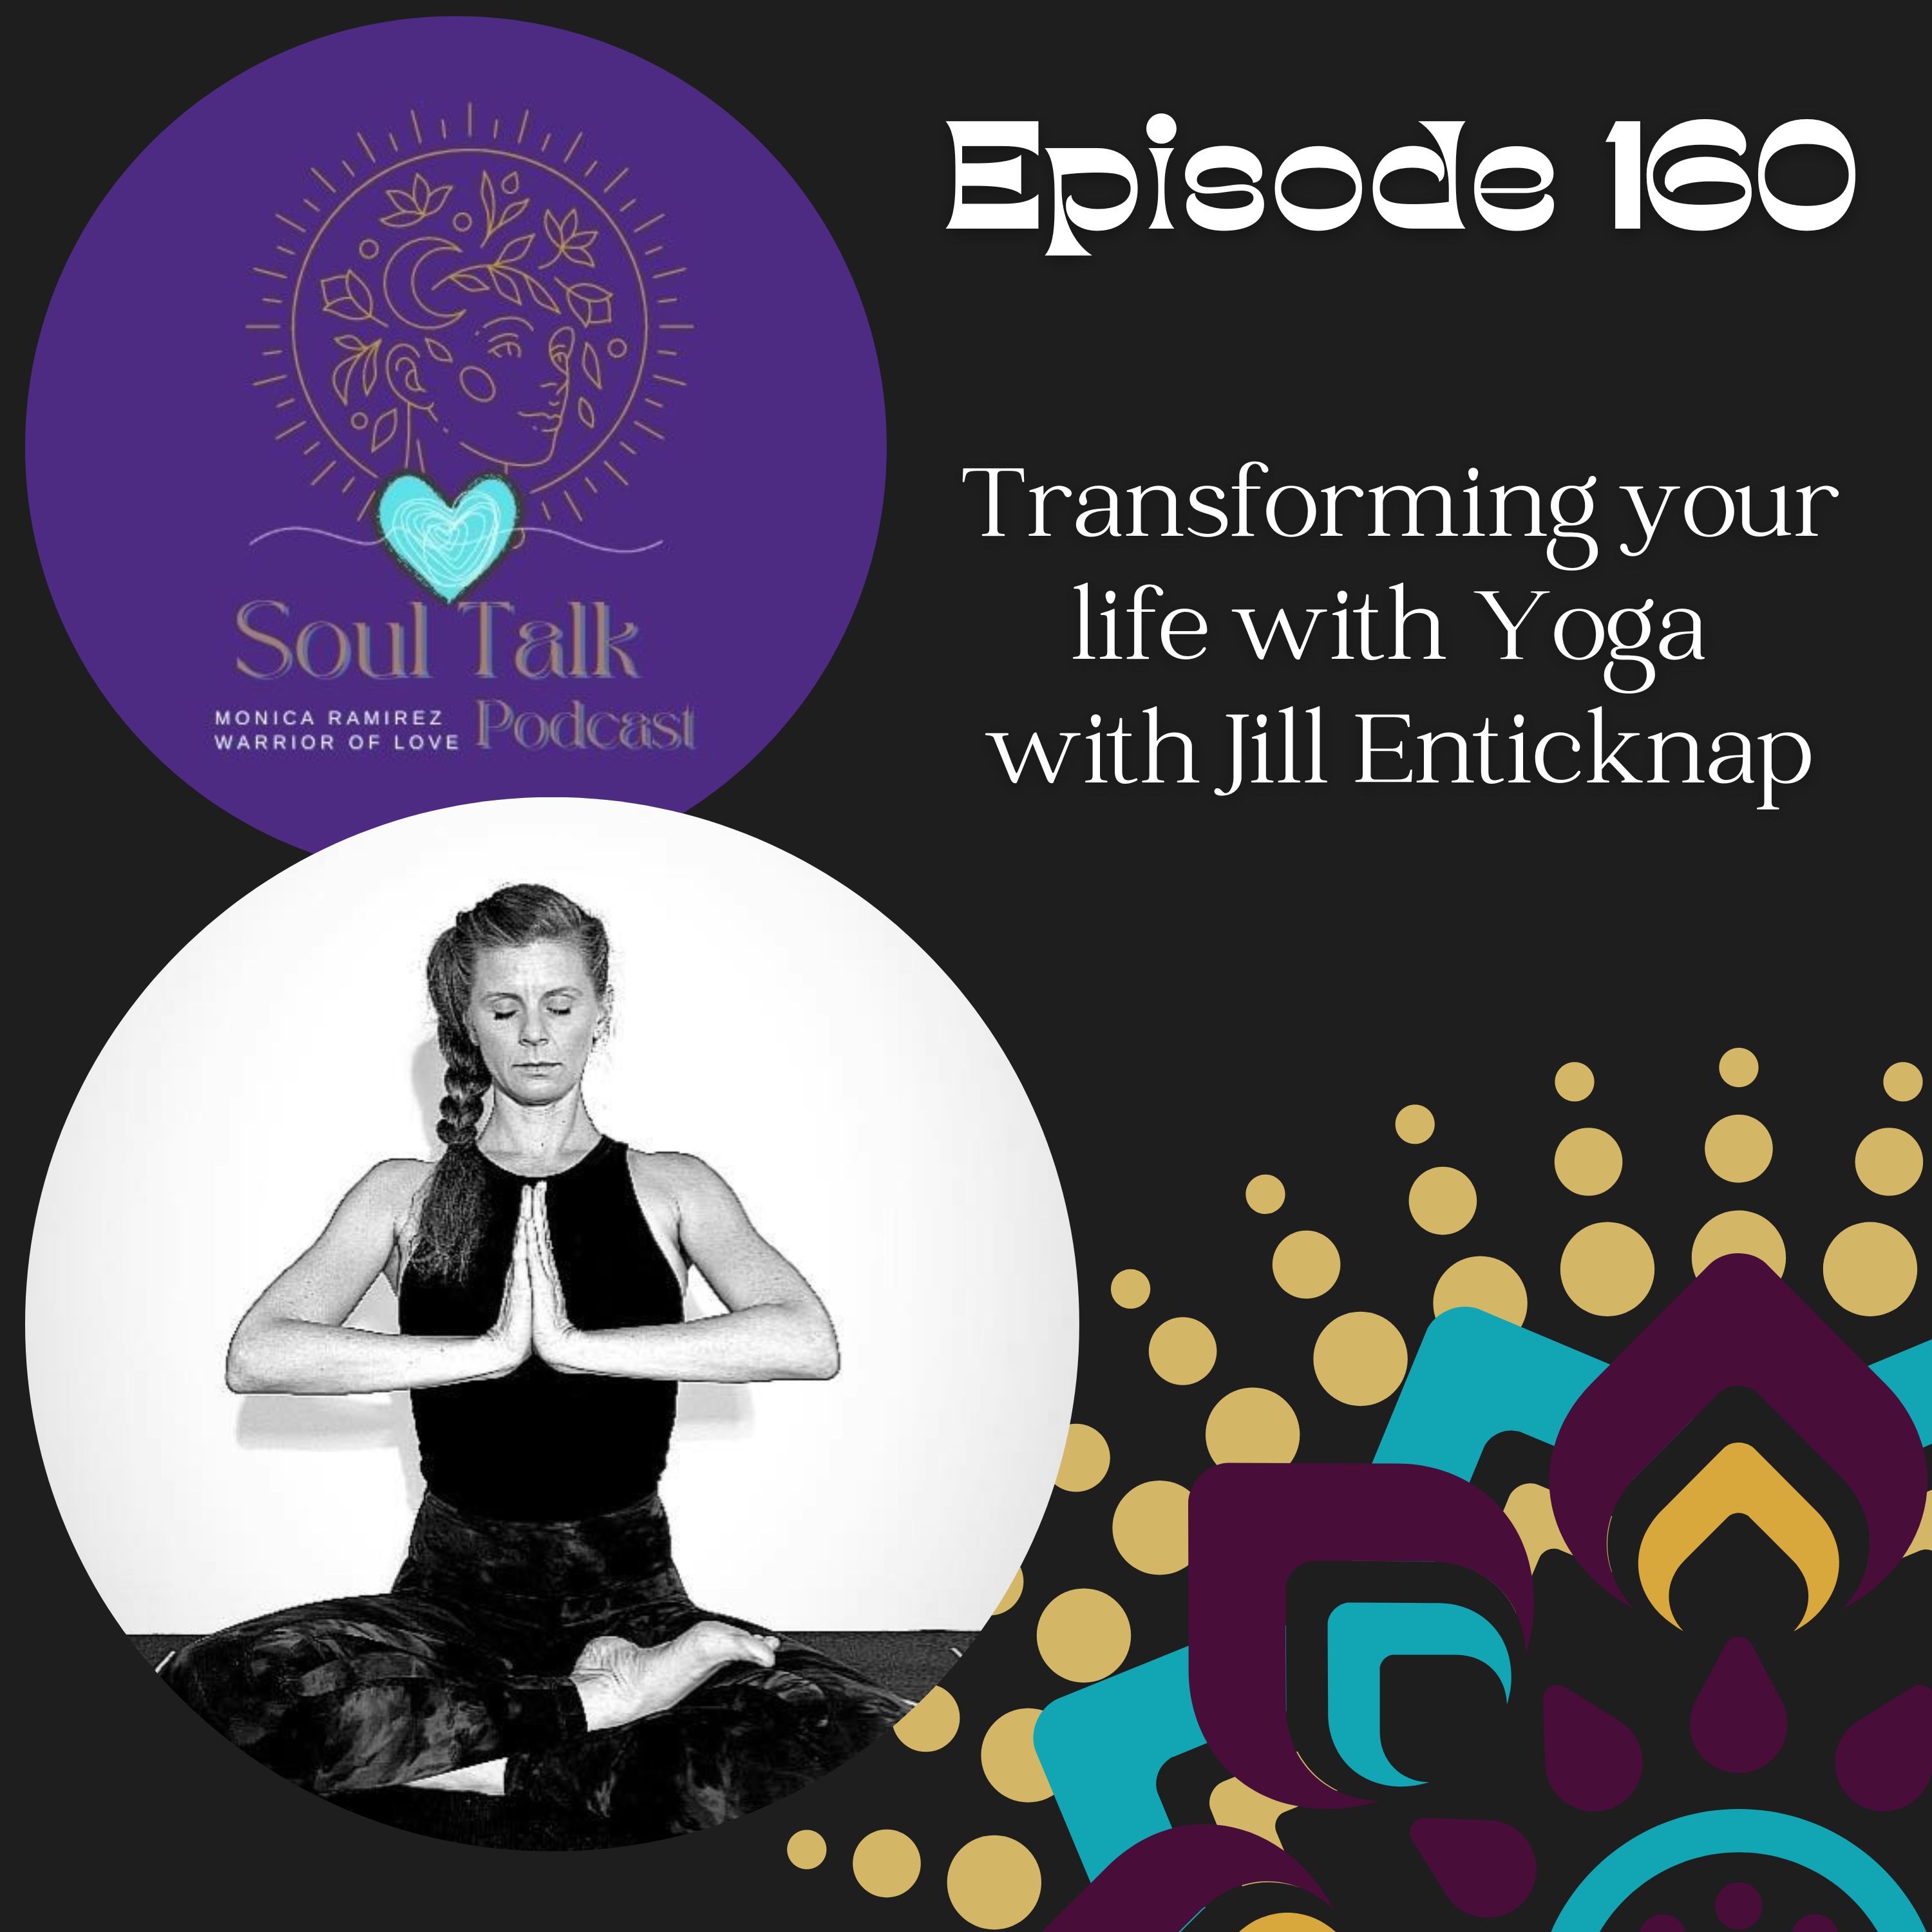 The Soul Talk Episode 160: Transforming your Life Through Yoga with Jill Enticknap